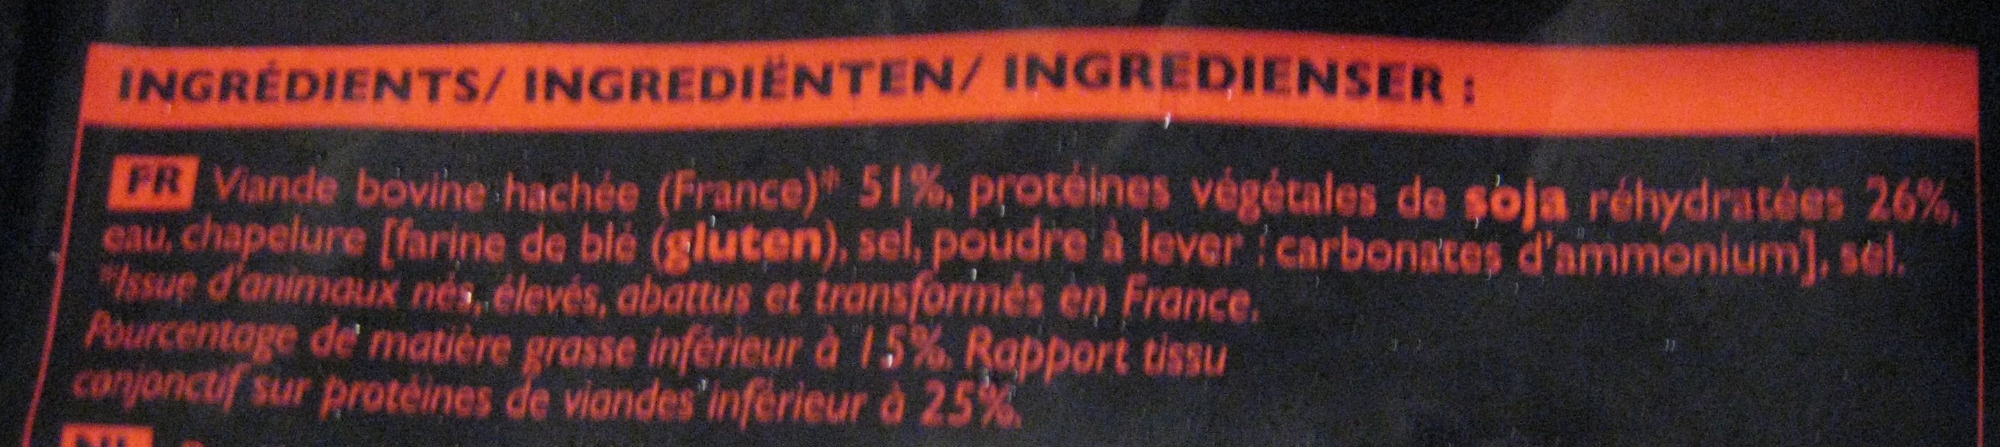 Boulettes au boeuf crues - Ingredients - fr